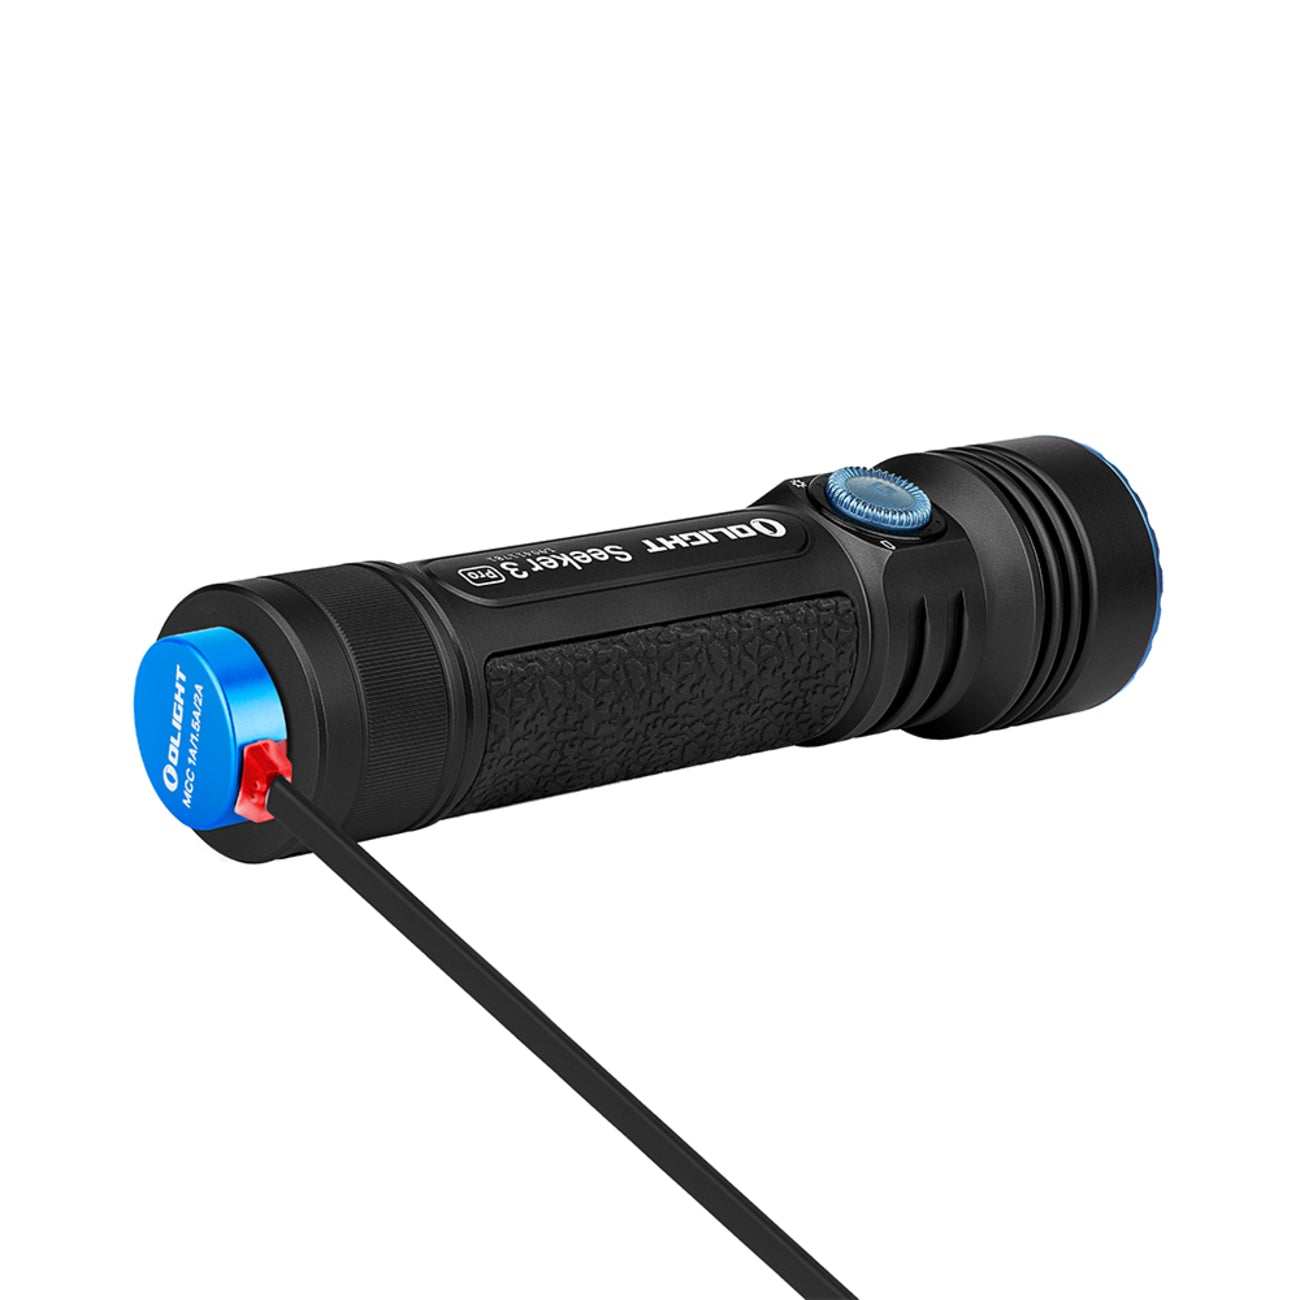 Olight Seeker 3 Pro max 4200 Lumens flashlight Flashlights and Lighting Olight Tactical Gear Supplier Tactical Distributors Australia